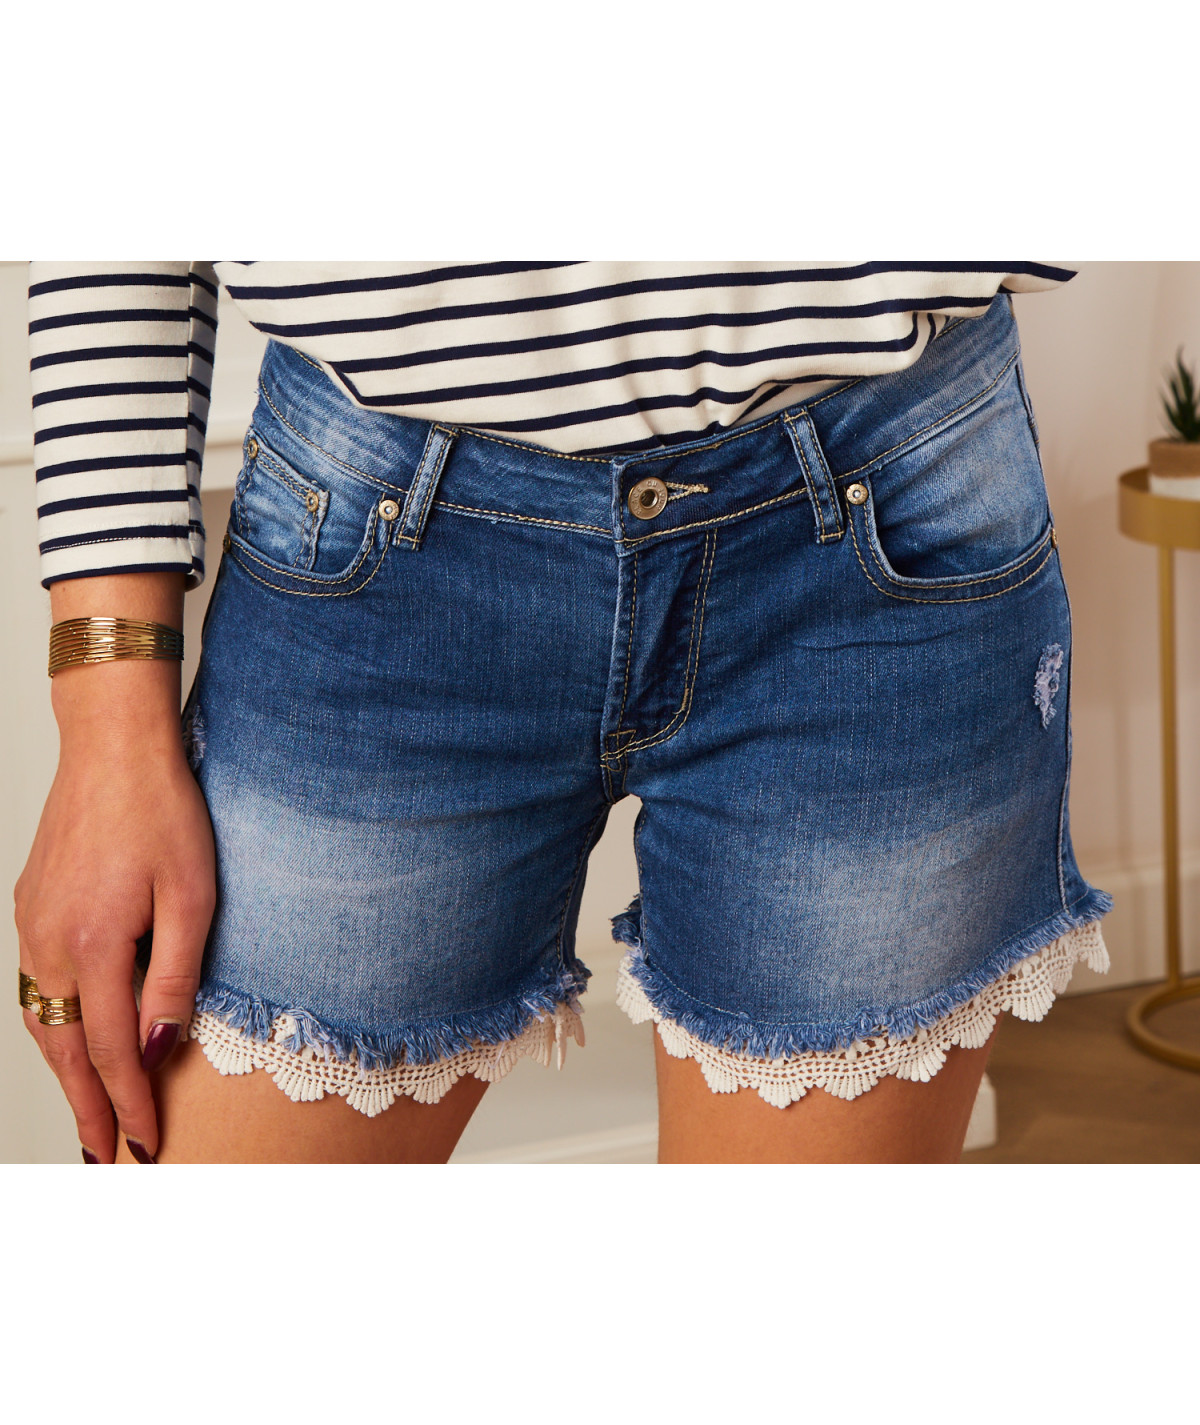 lace jean shorts